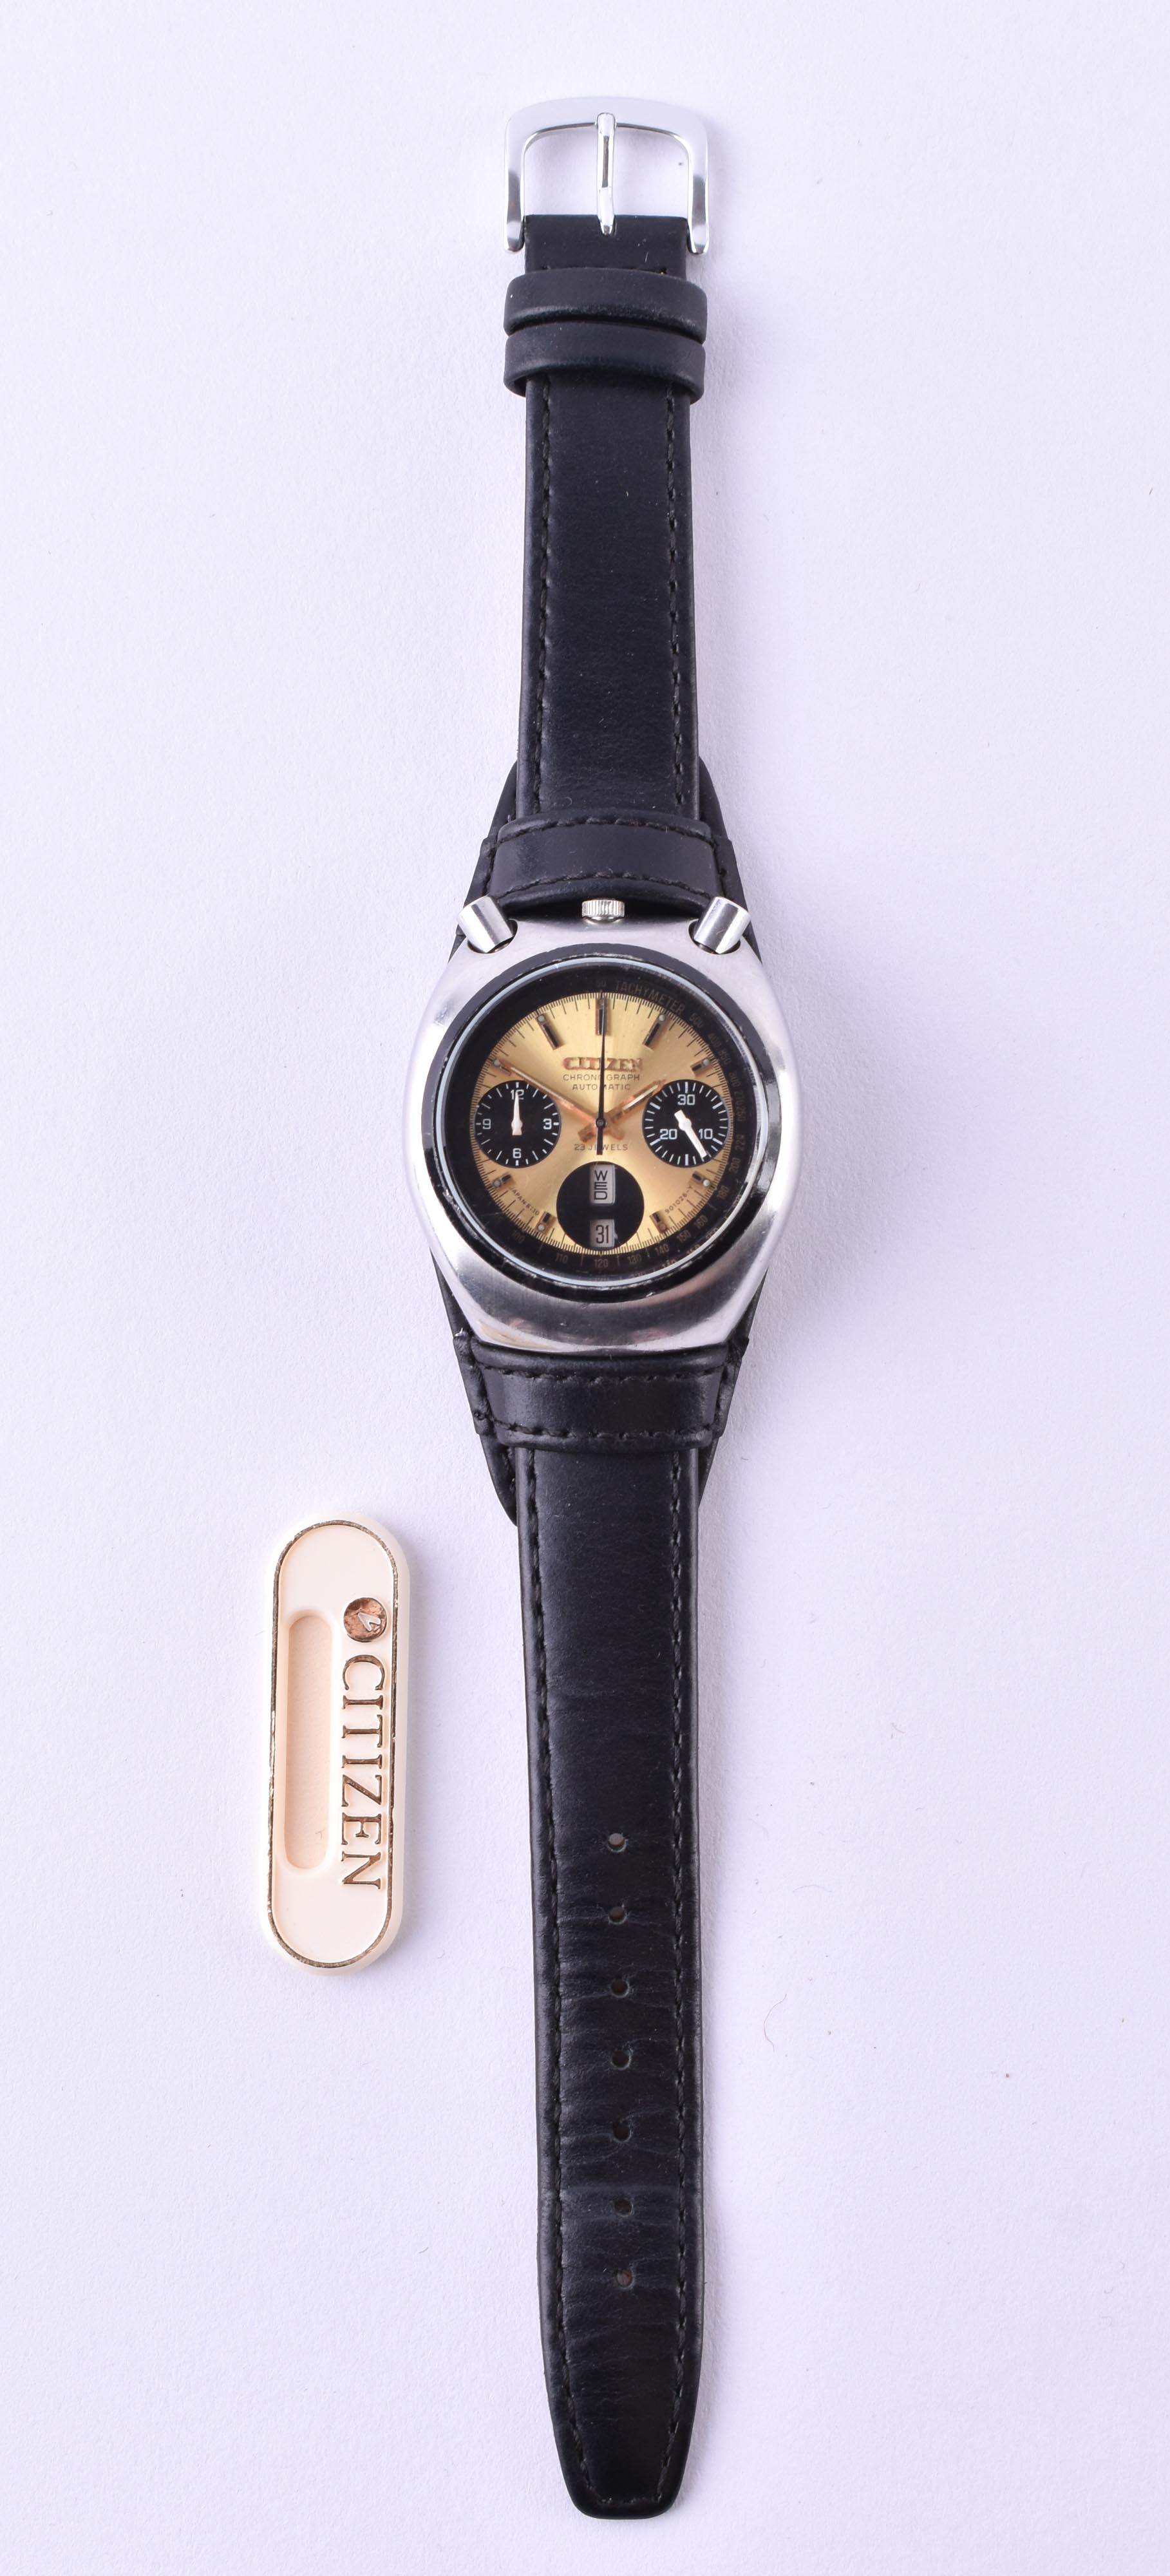 Citizen Bullhead calibre 8110 chronograph wristwatch 70s - Image 2 of 3